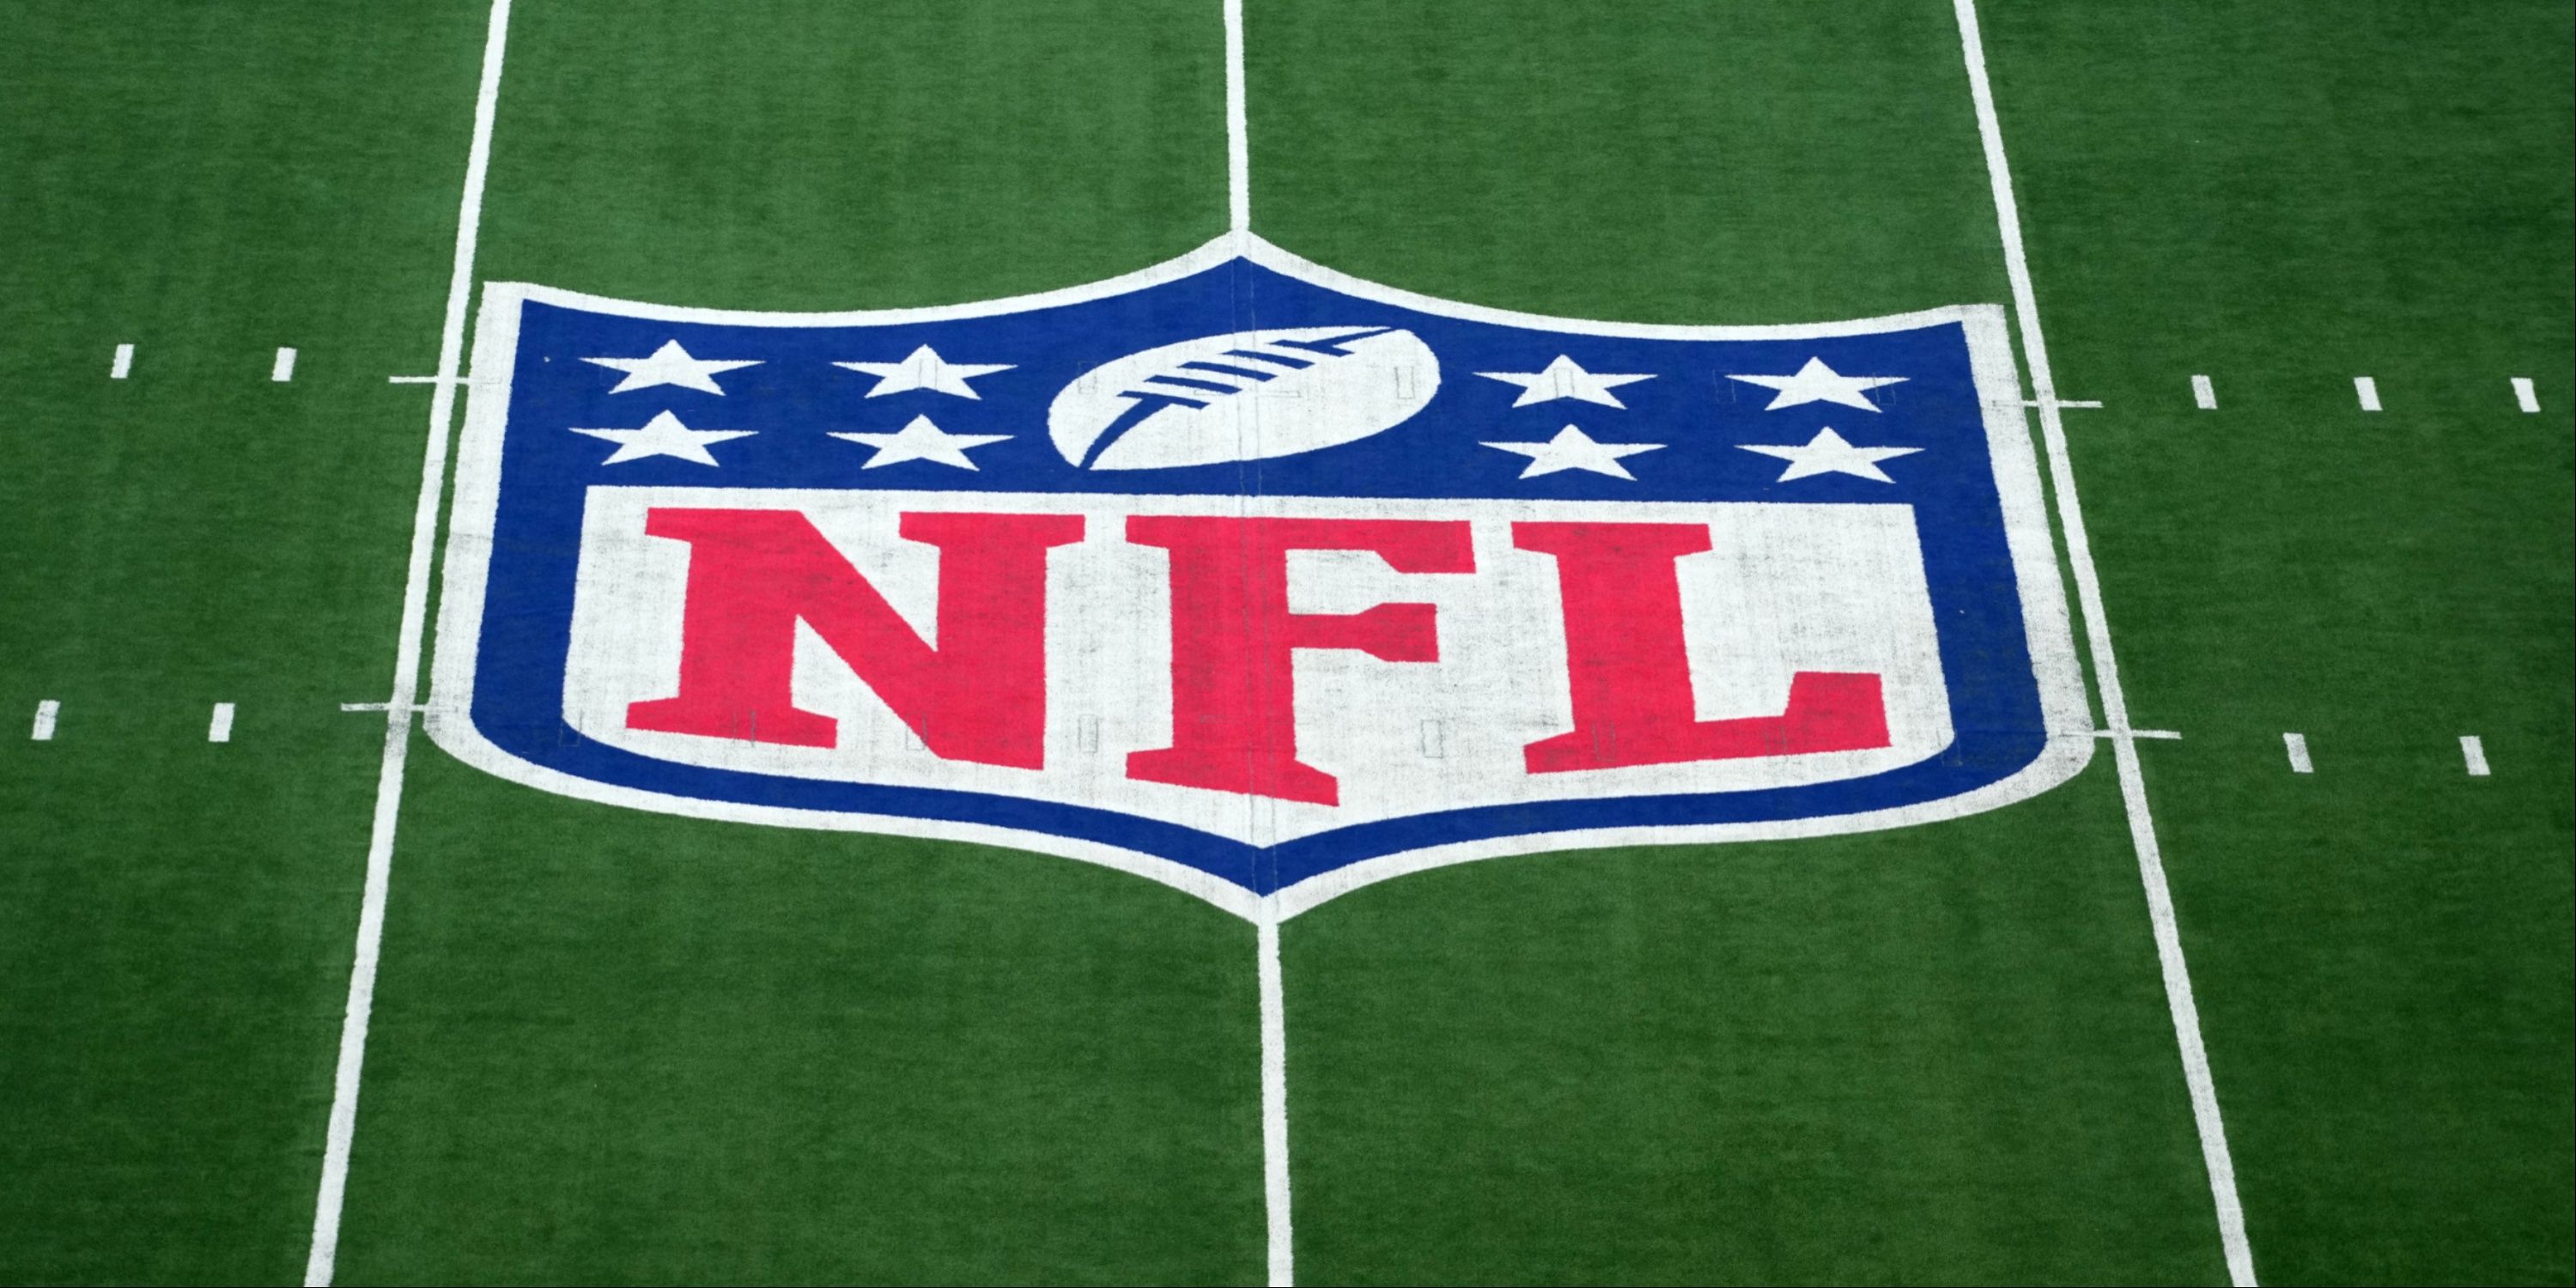 NFL Logo on the field